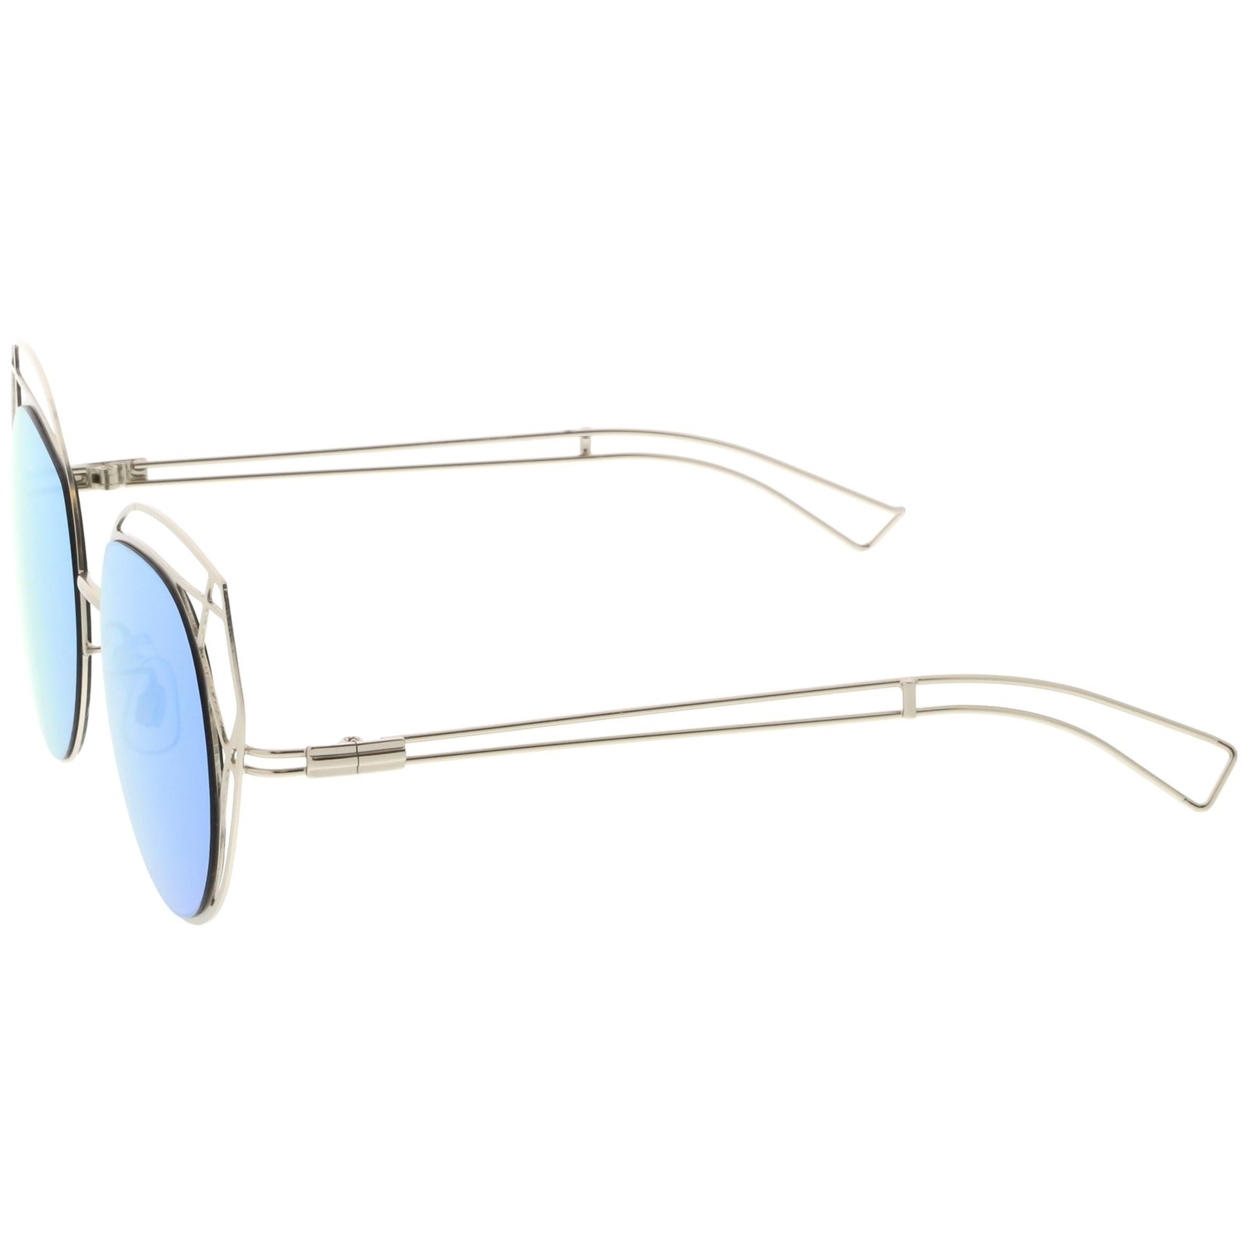 Geometric Cutout Thin Metal Cat Eye Sunglasses Round Mirrored Flat Lens 53mm - Silver / Silver Mirror